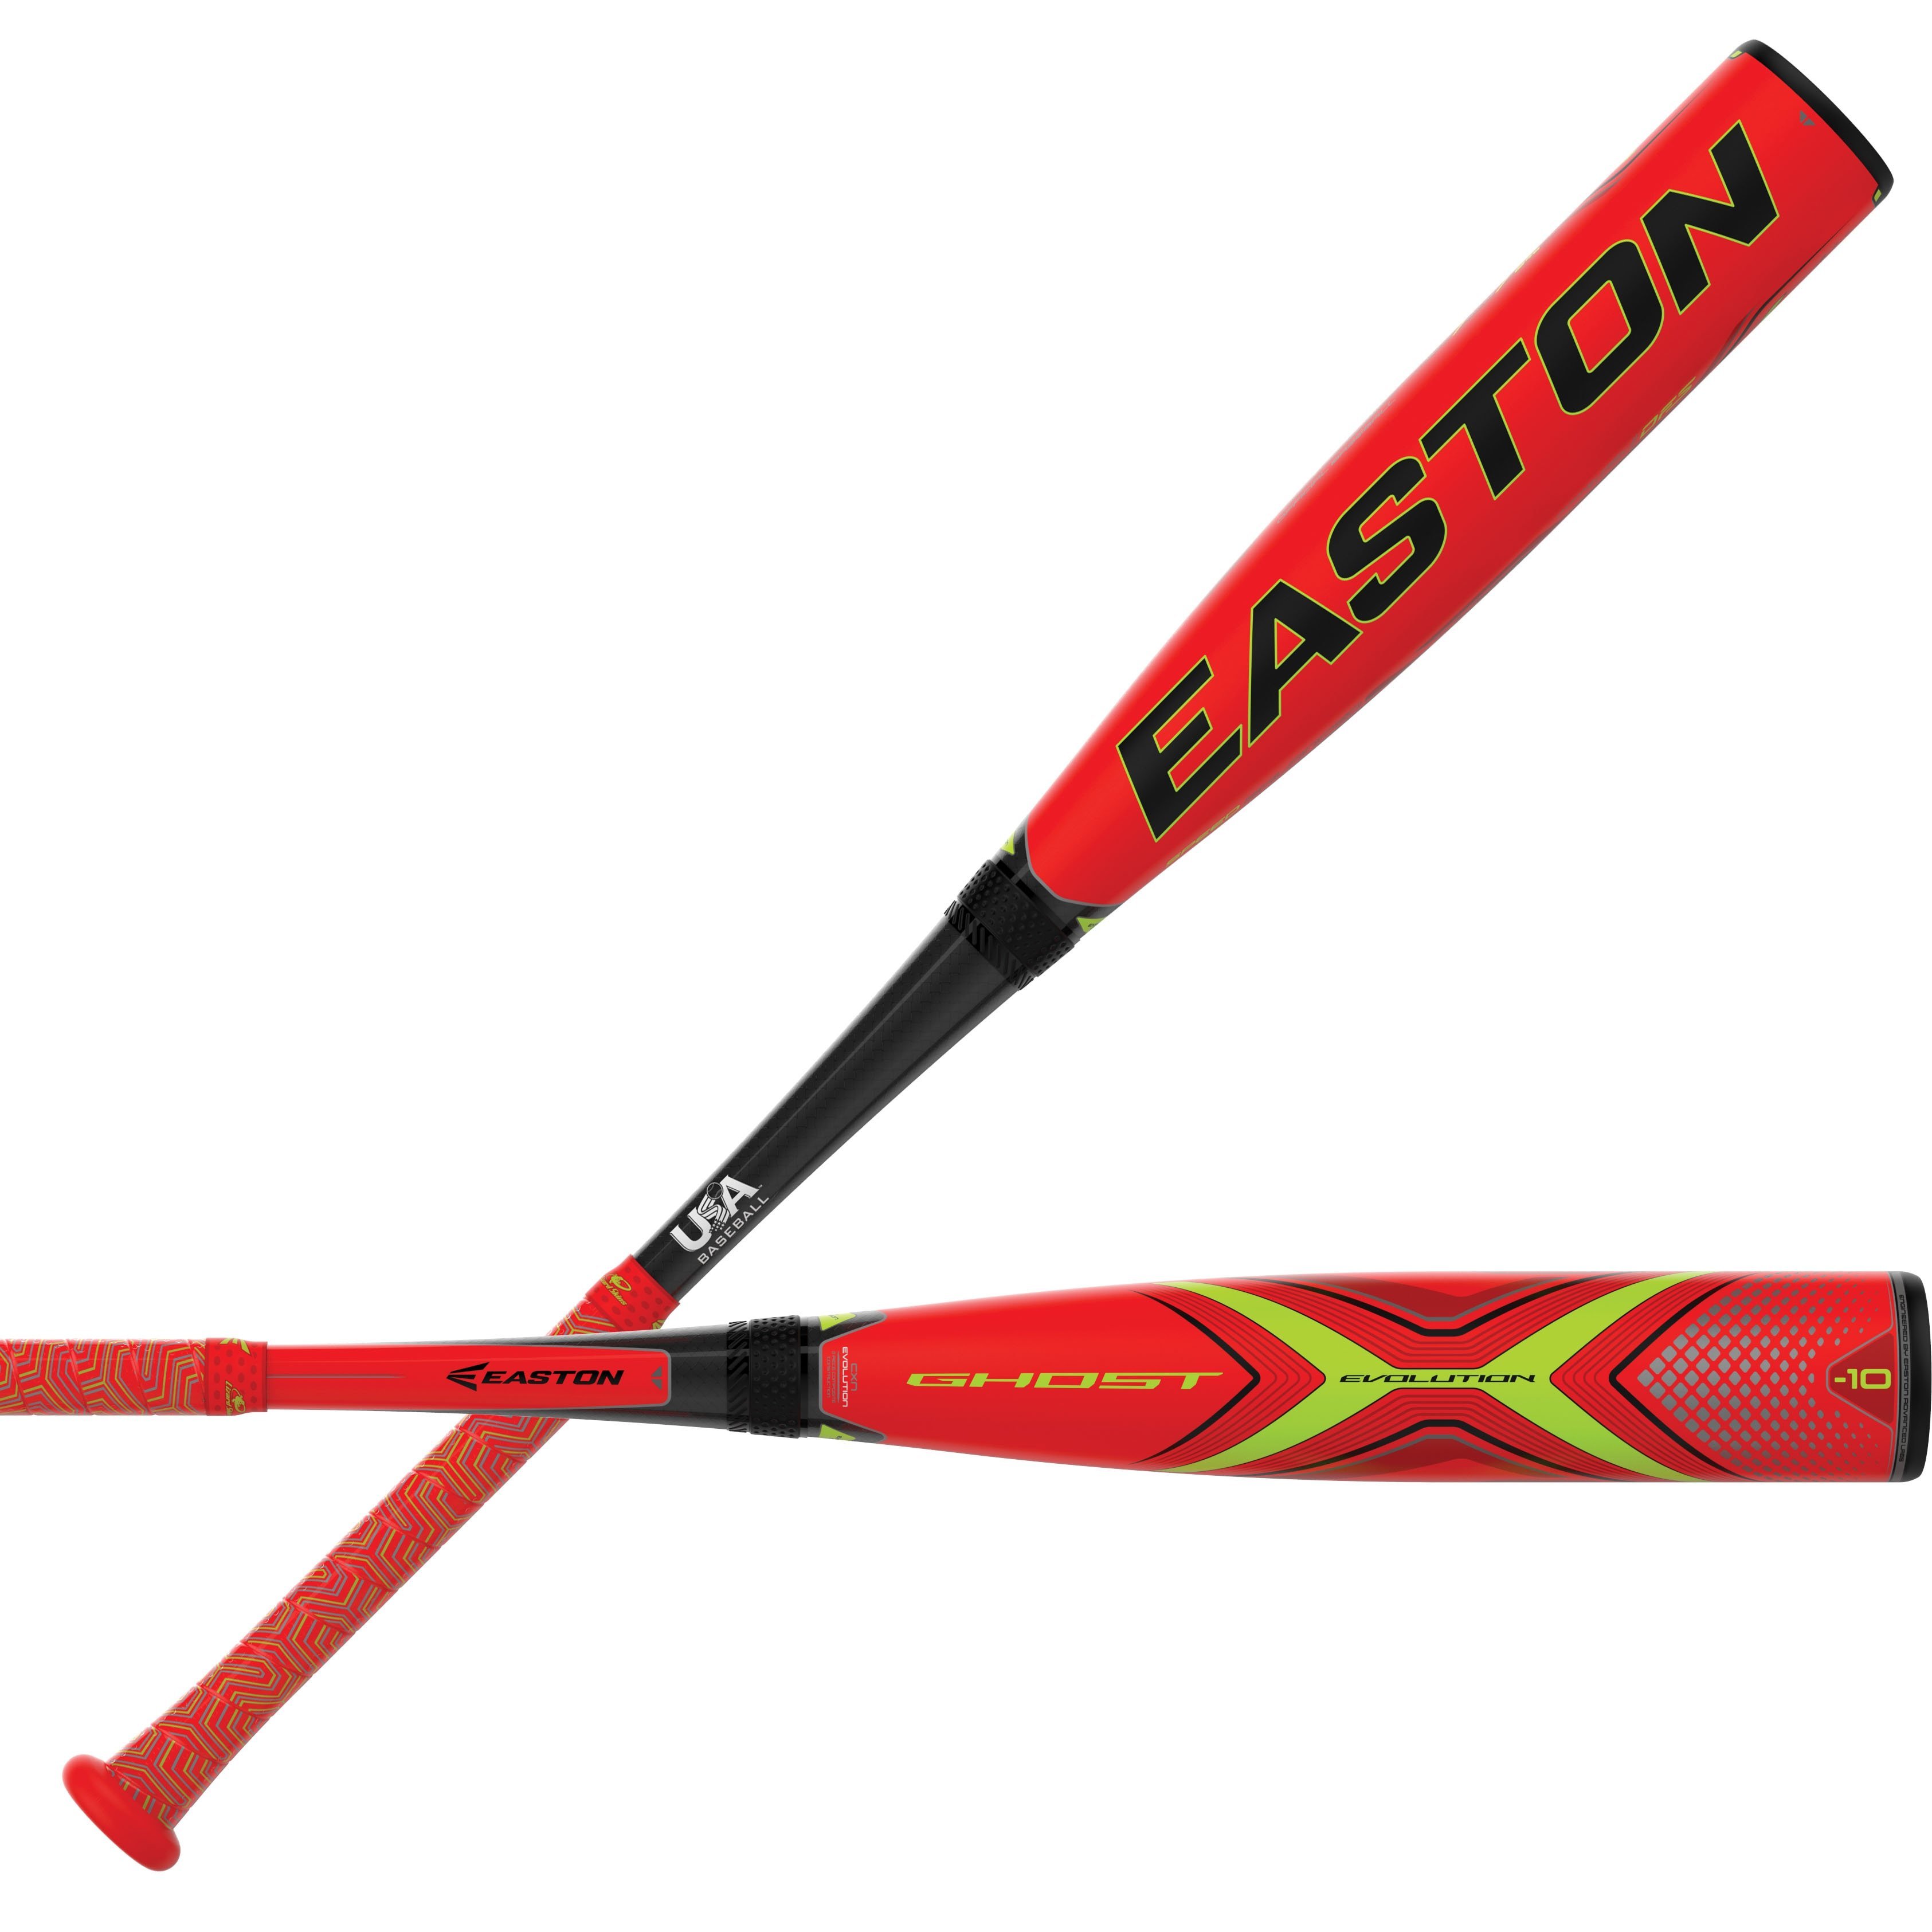 USA Composite Baseball Bat YBB19GXE10 -10 2019 Easton Ghost X Evolution 31/21 